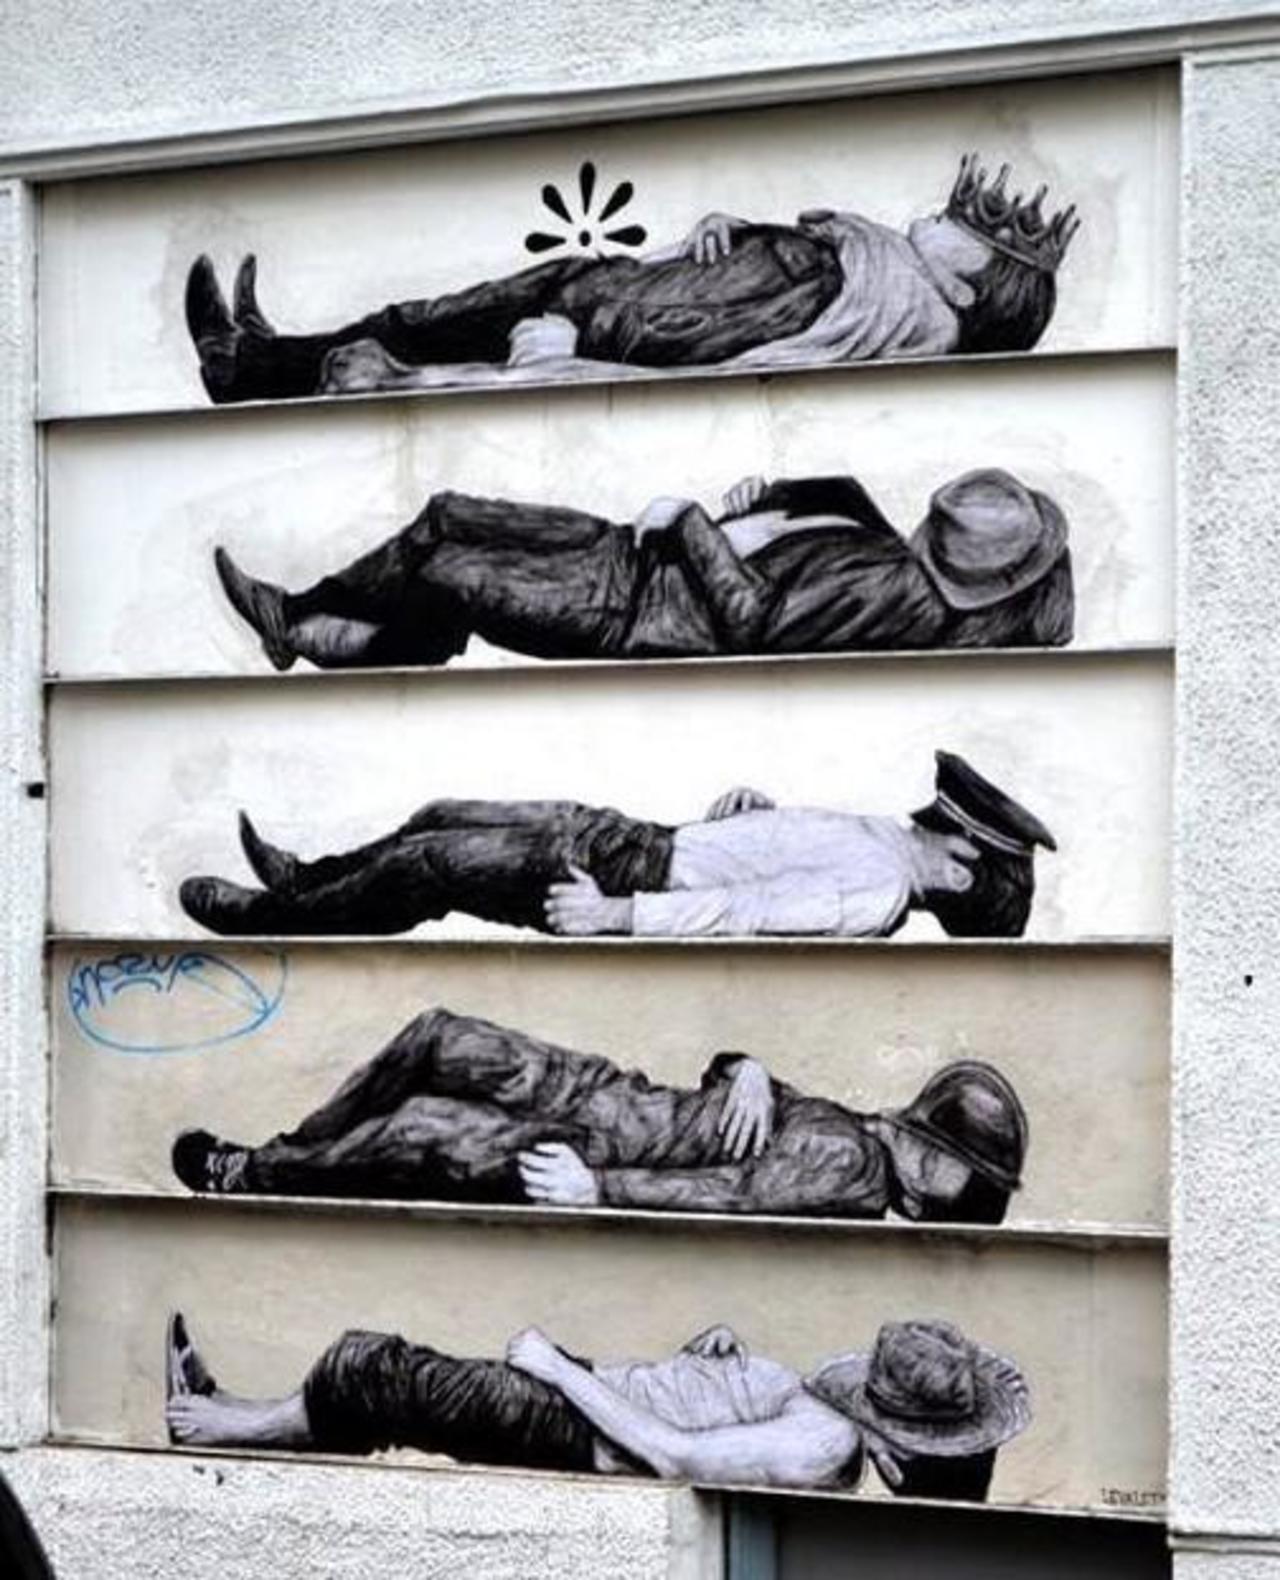 L'ordre des choses, 2015
#Paris #France
by #Levalet ()
#streetart #graffiti #art http://t.co/2k6UIaKyAx